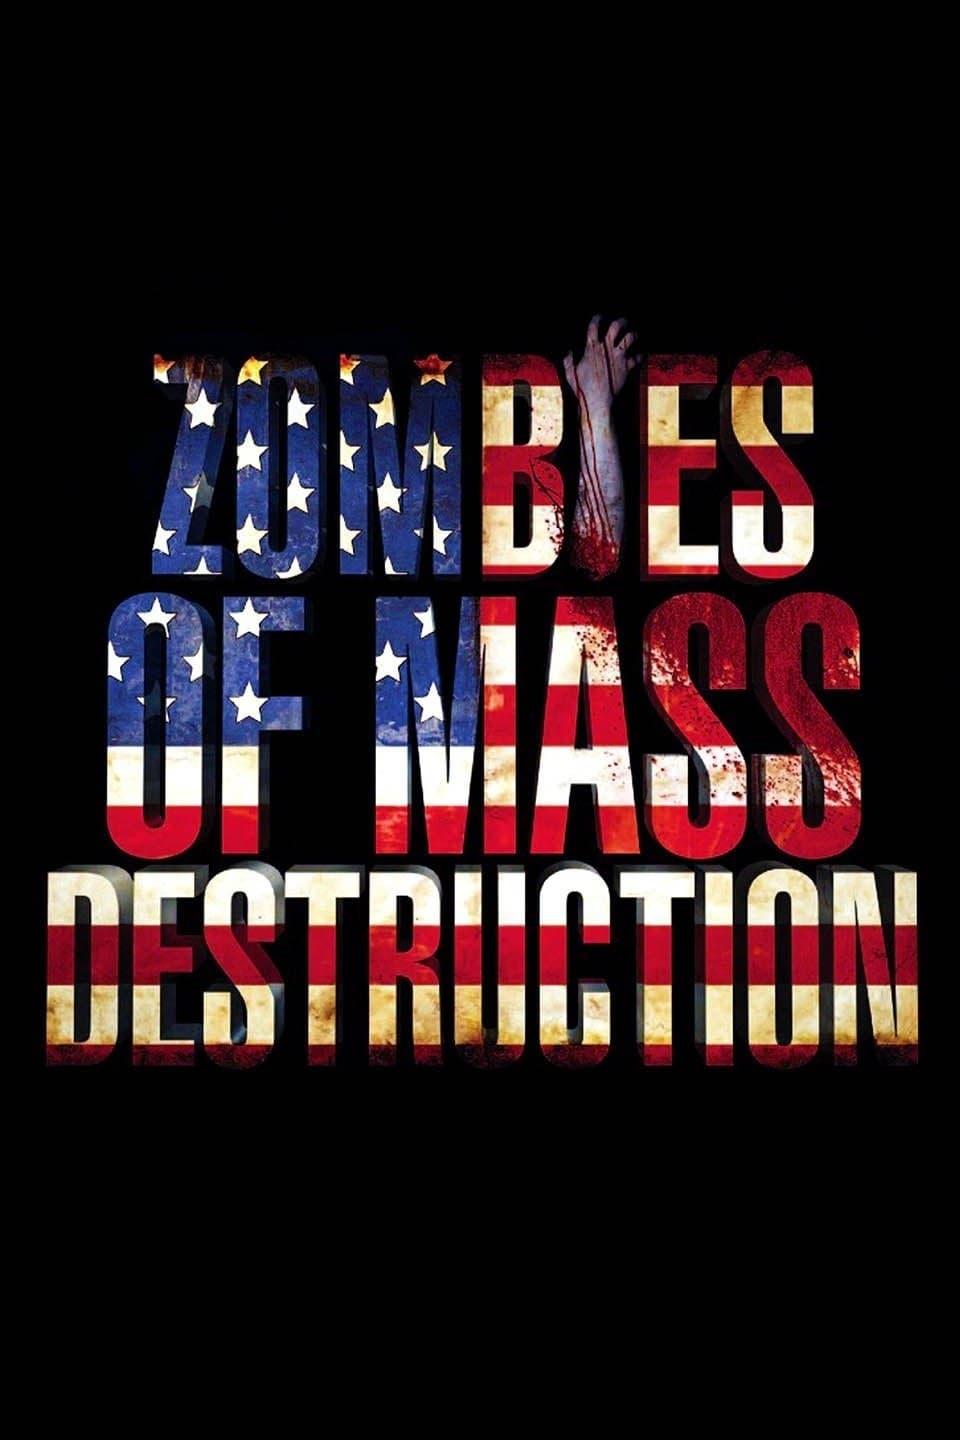 ZMD: Zombies of Mass Destruction poster